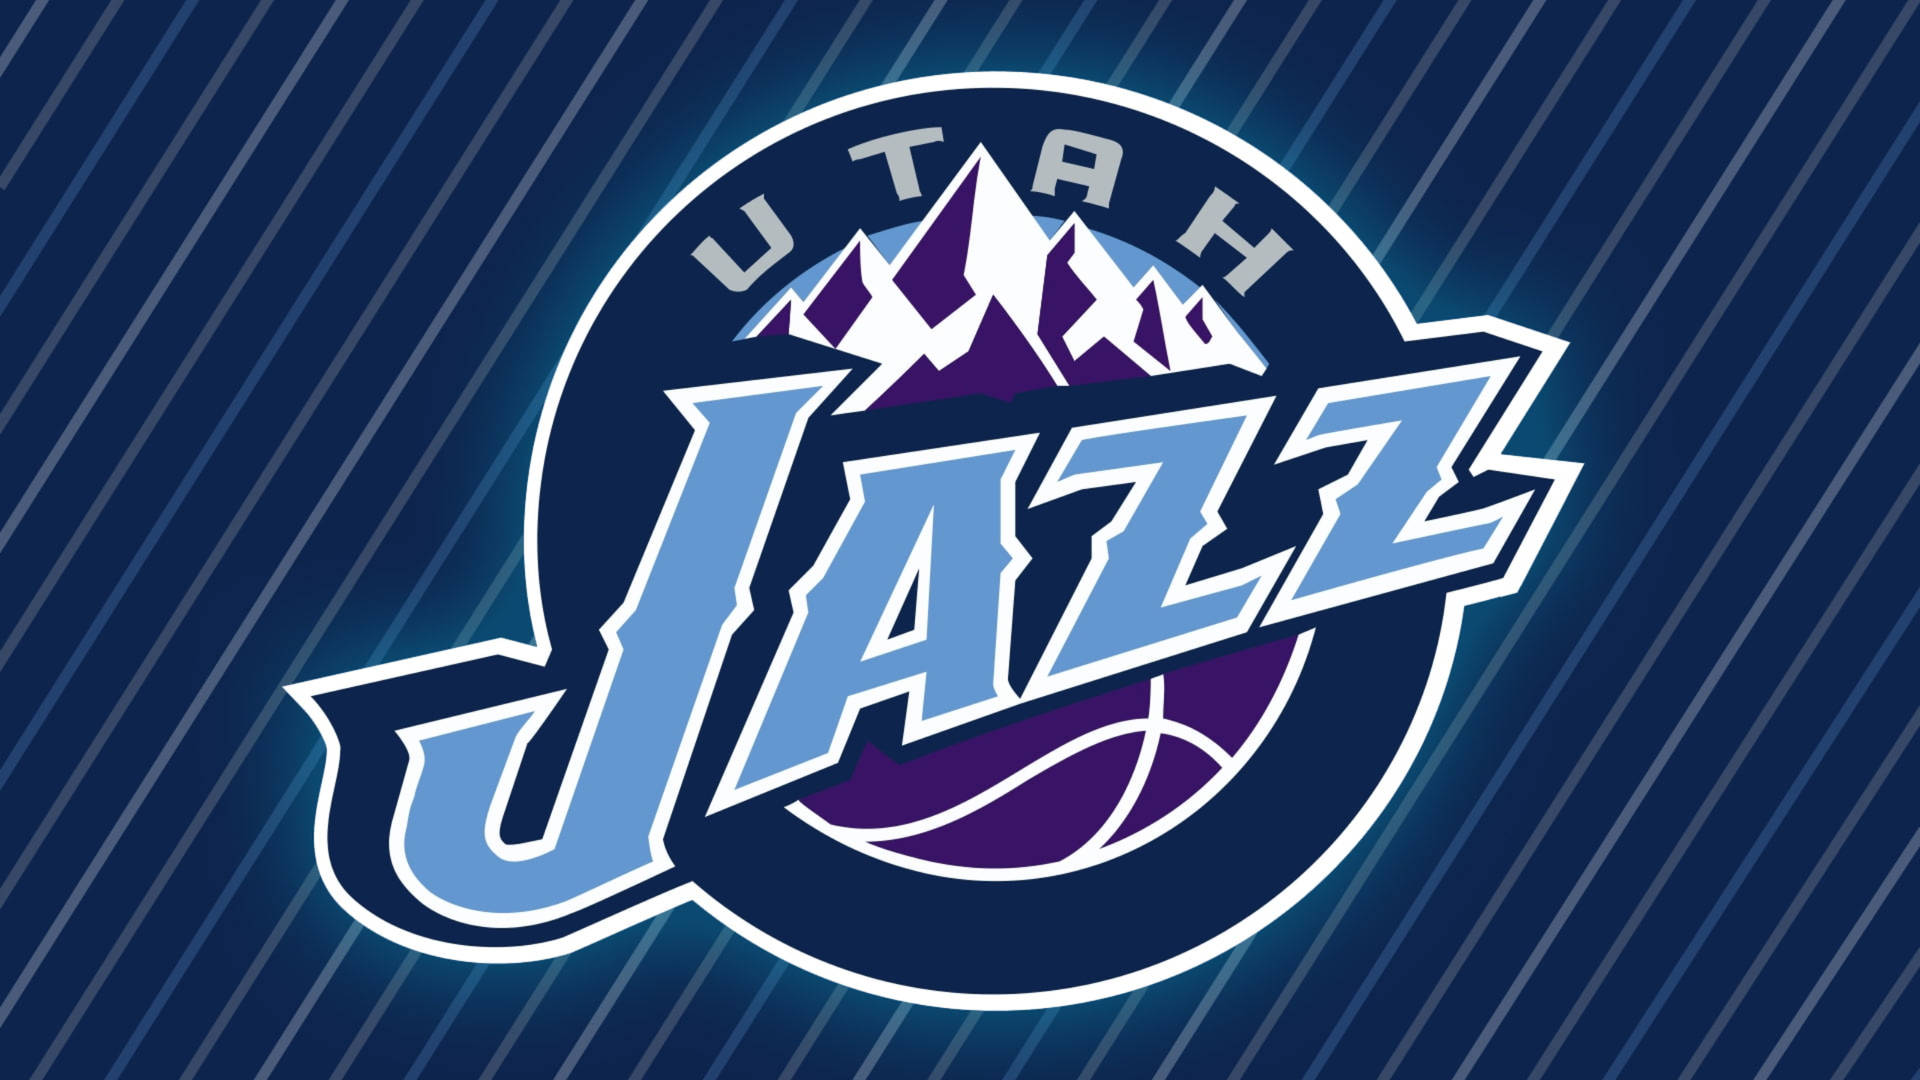 Utah Jazz In Blue Stripes Background